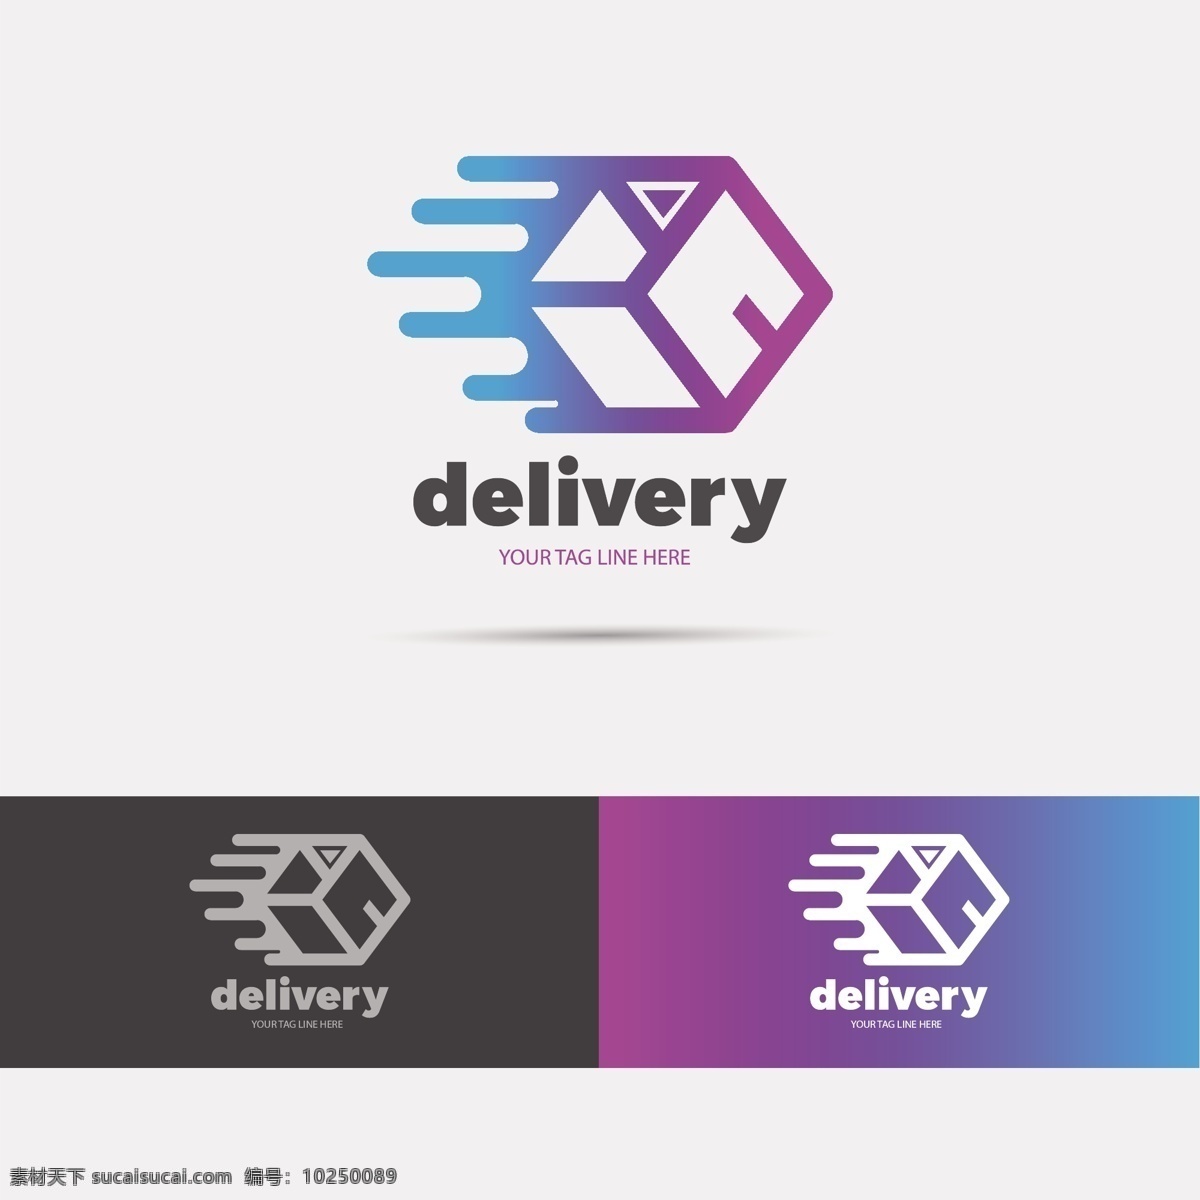 delivery 交付 标志 logo 模板 logo模板 扁平化 简约